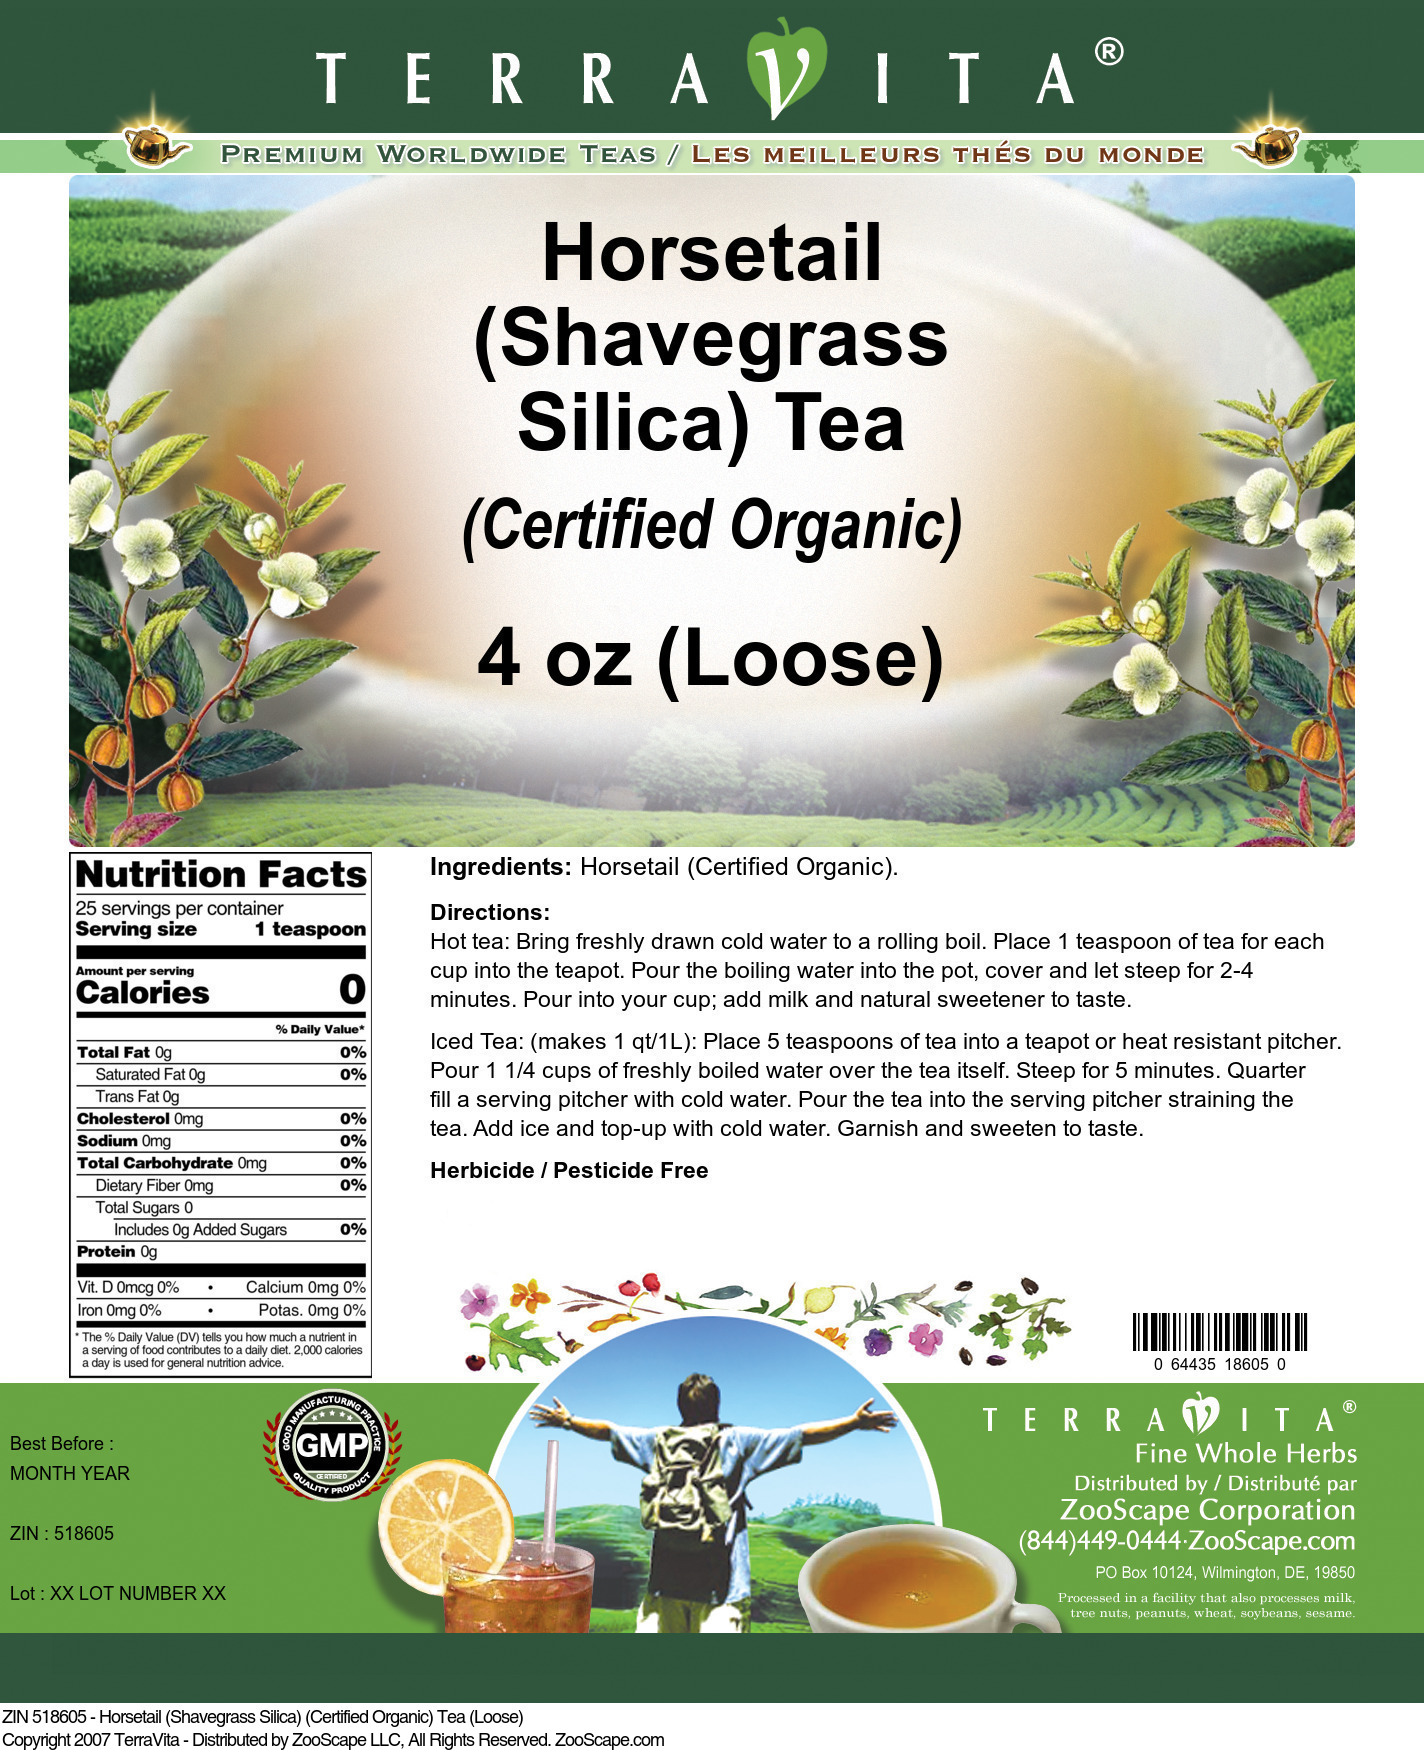 Horsetail (Shavegrass Silica) (Certified Organic) Tea (Loose) - Label